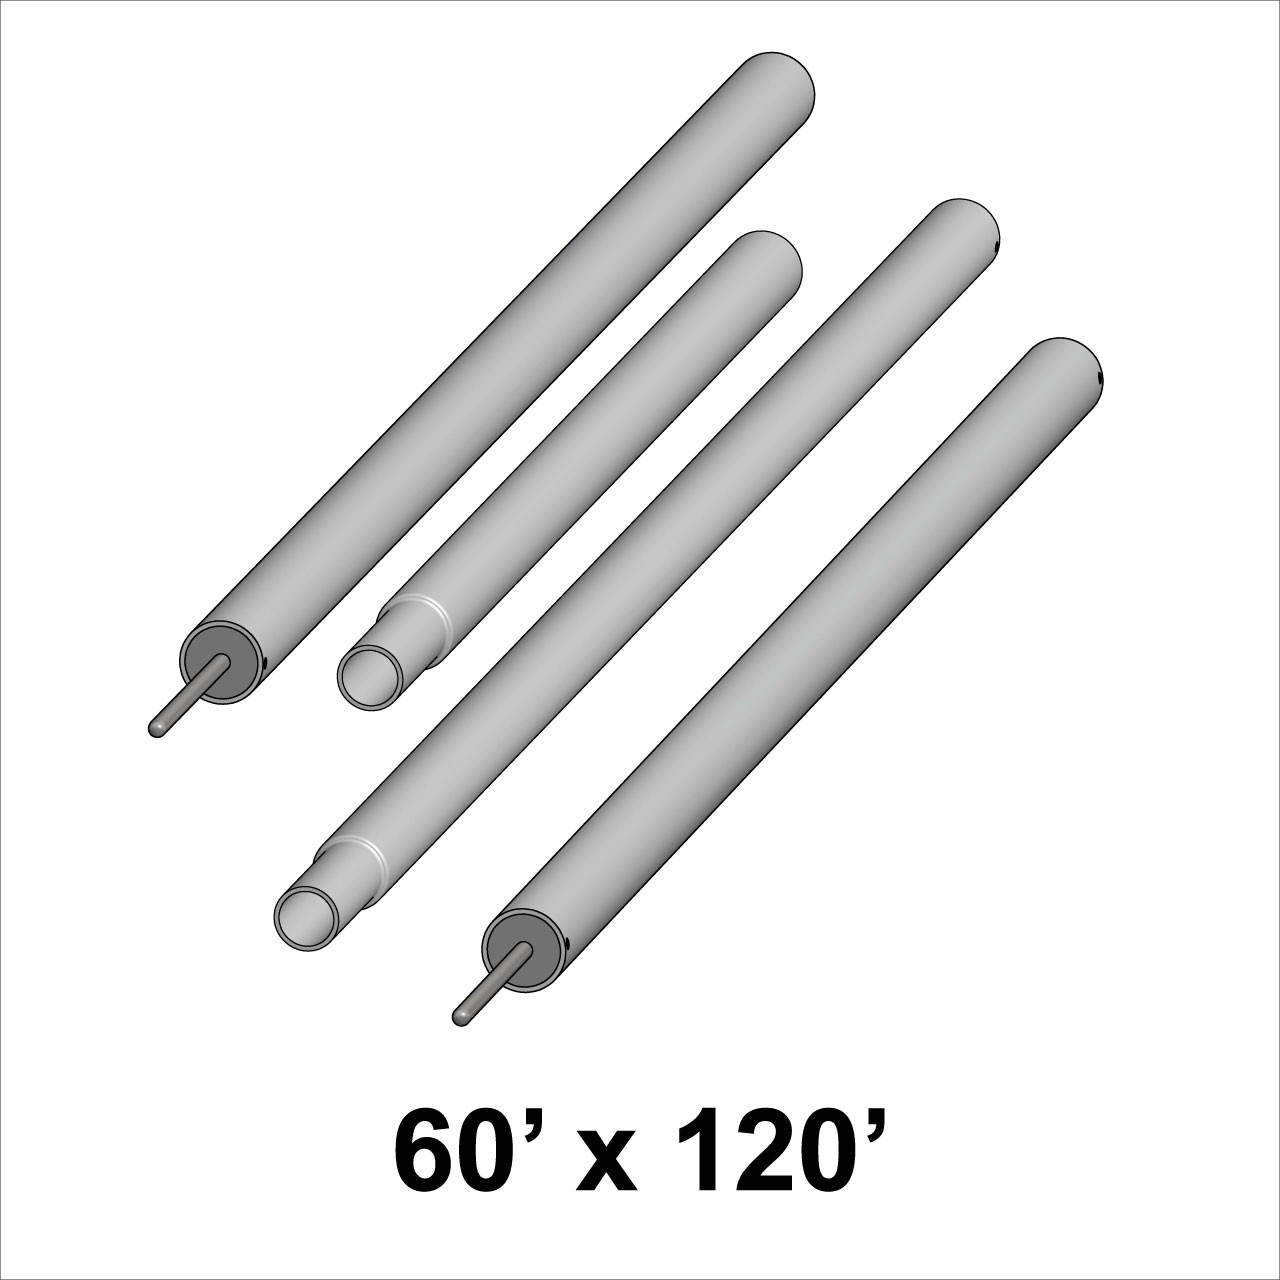 60' x 120' Classic Series Pole Kit